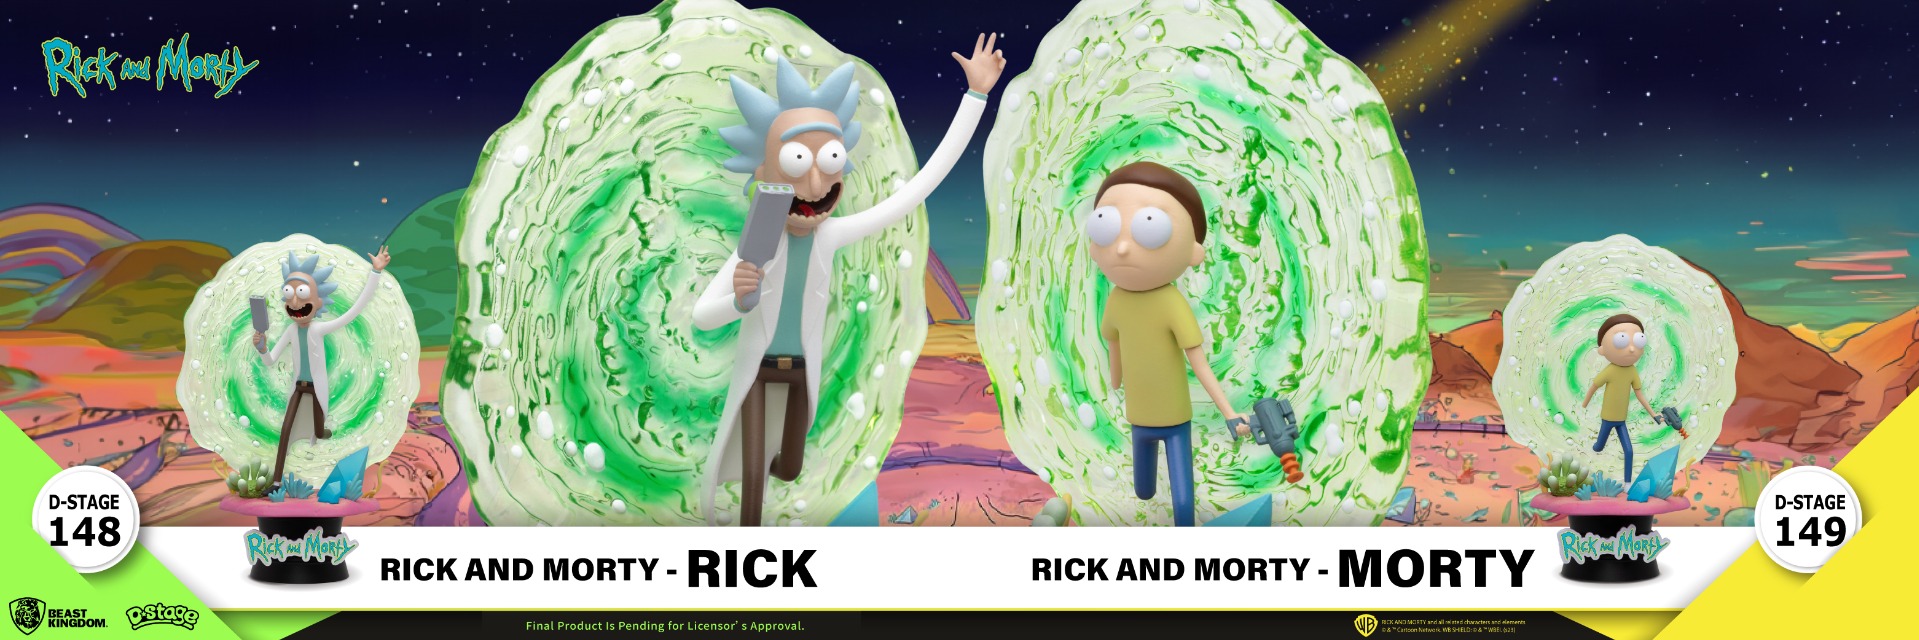 DS-148 - Rick & Morty - Rick, DS-149 - Rick & Morty - Morty